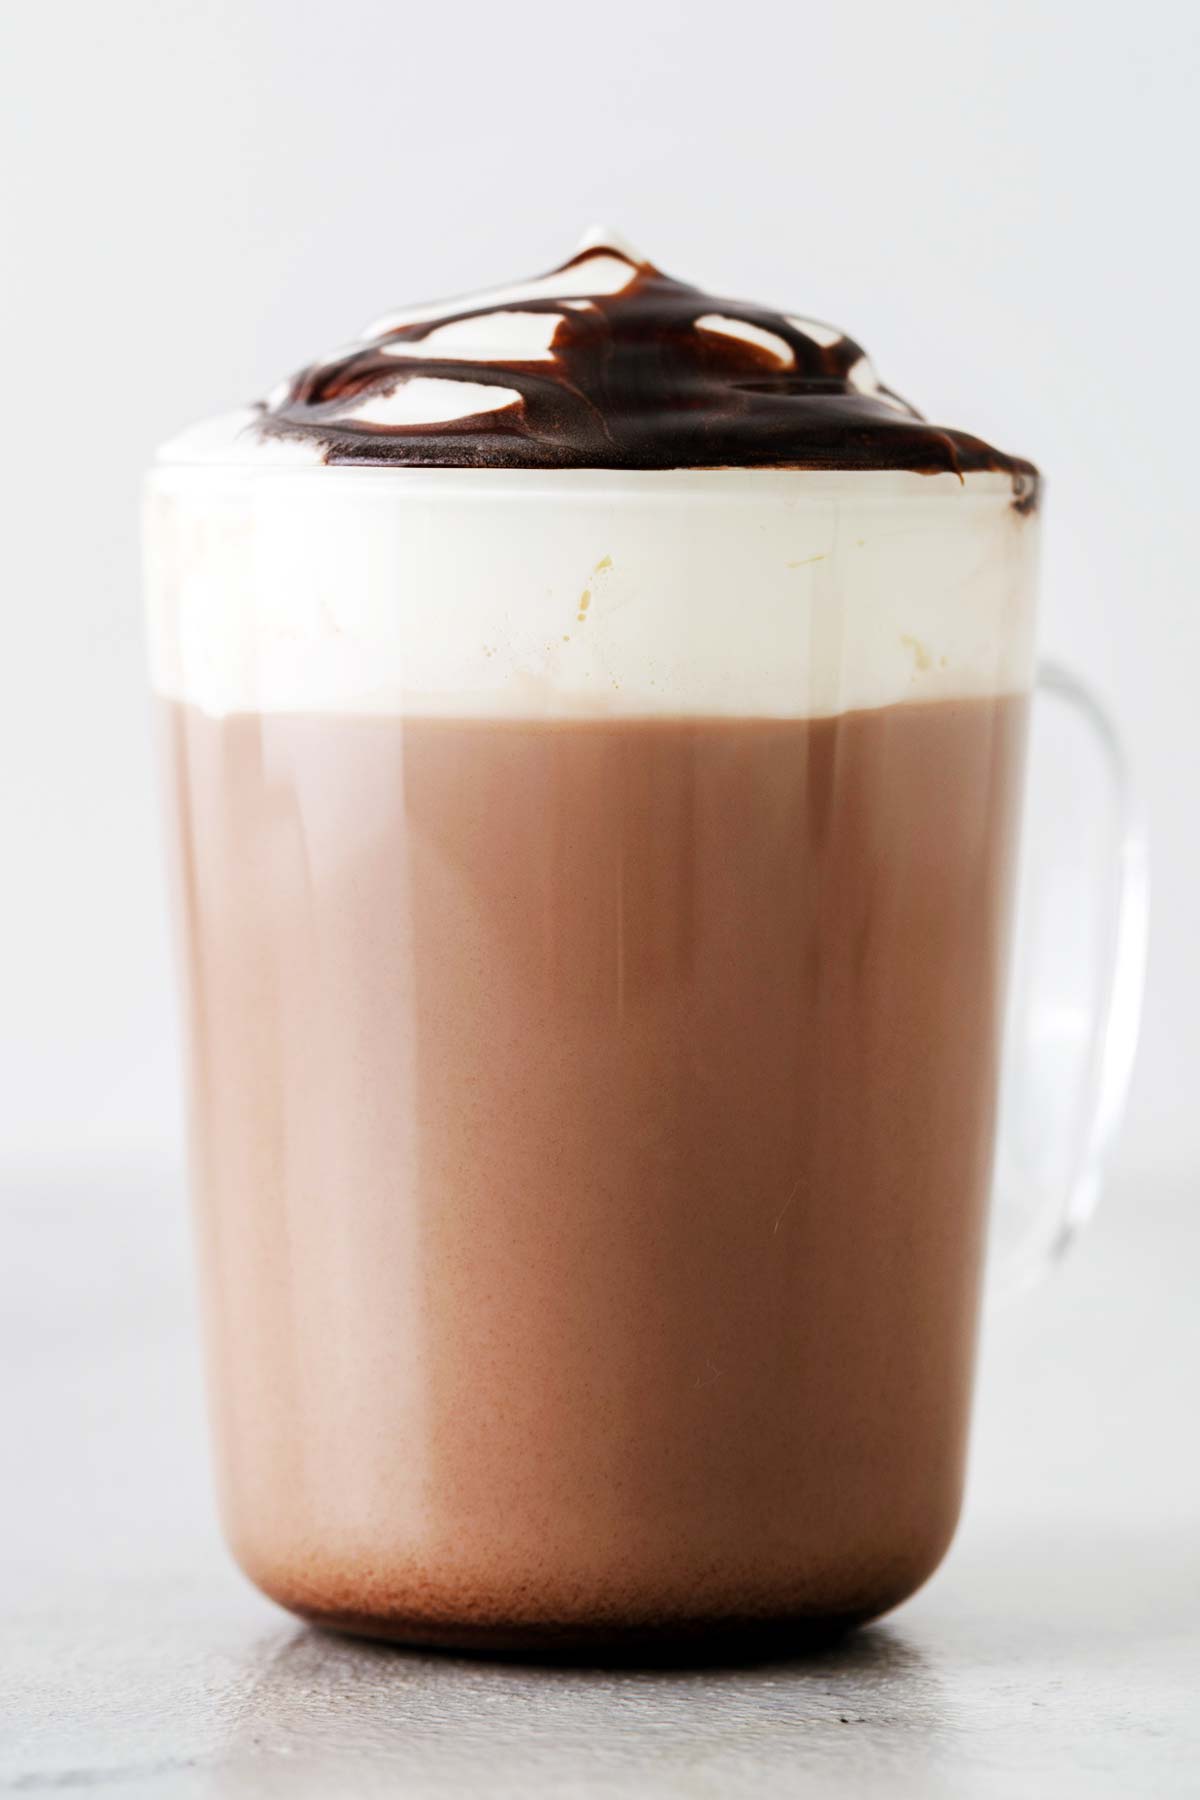 Cokelat panas buatan sendiri dengan krim kocok dalam cangkir kaca.